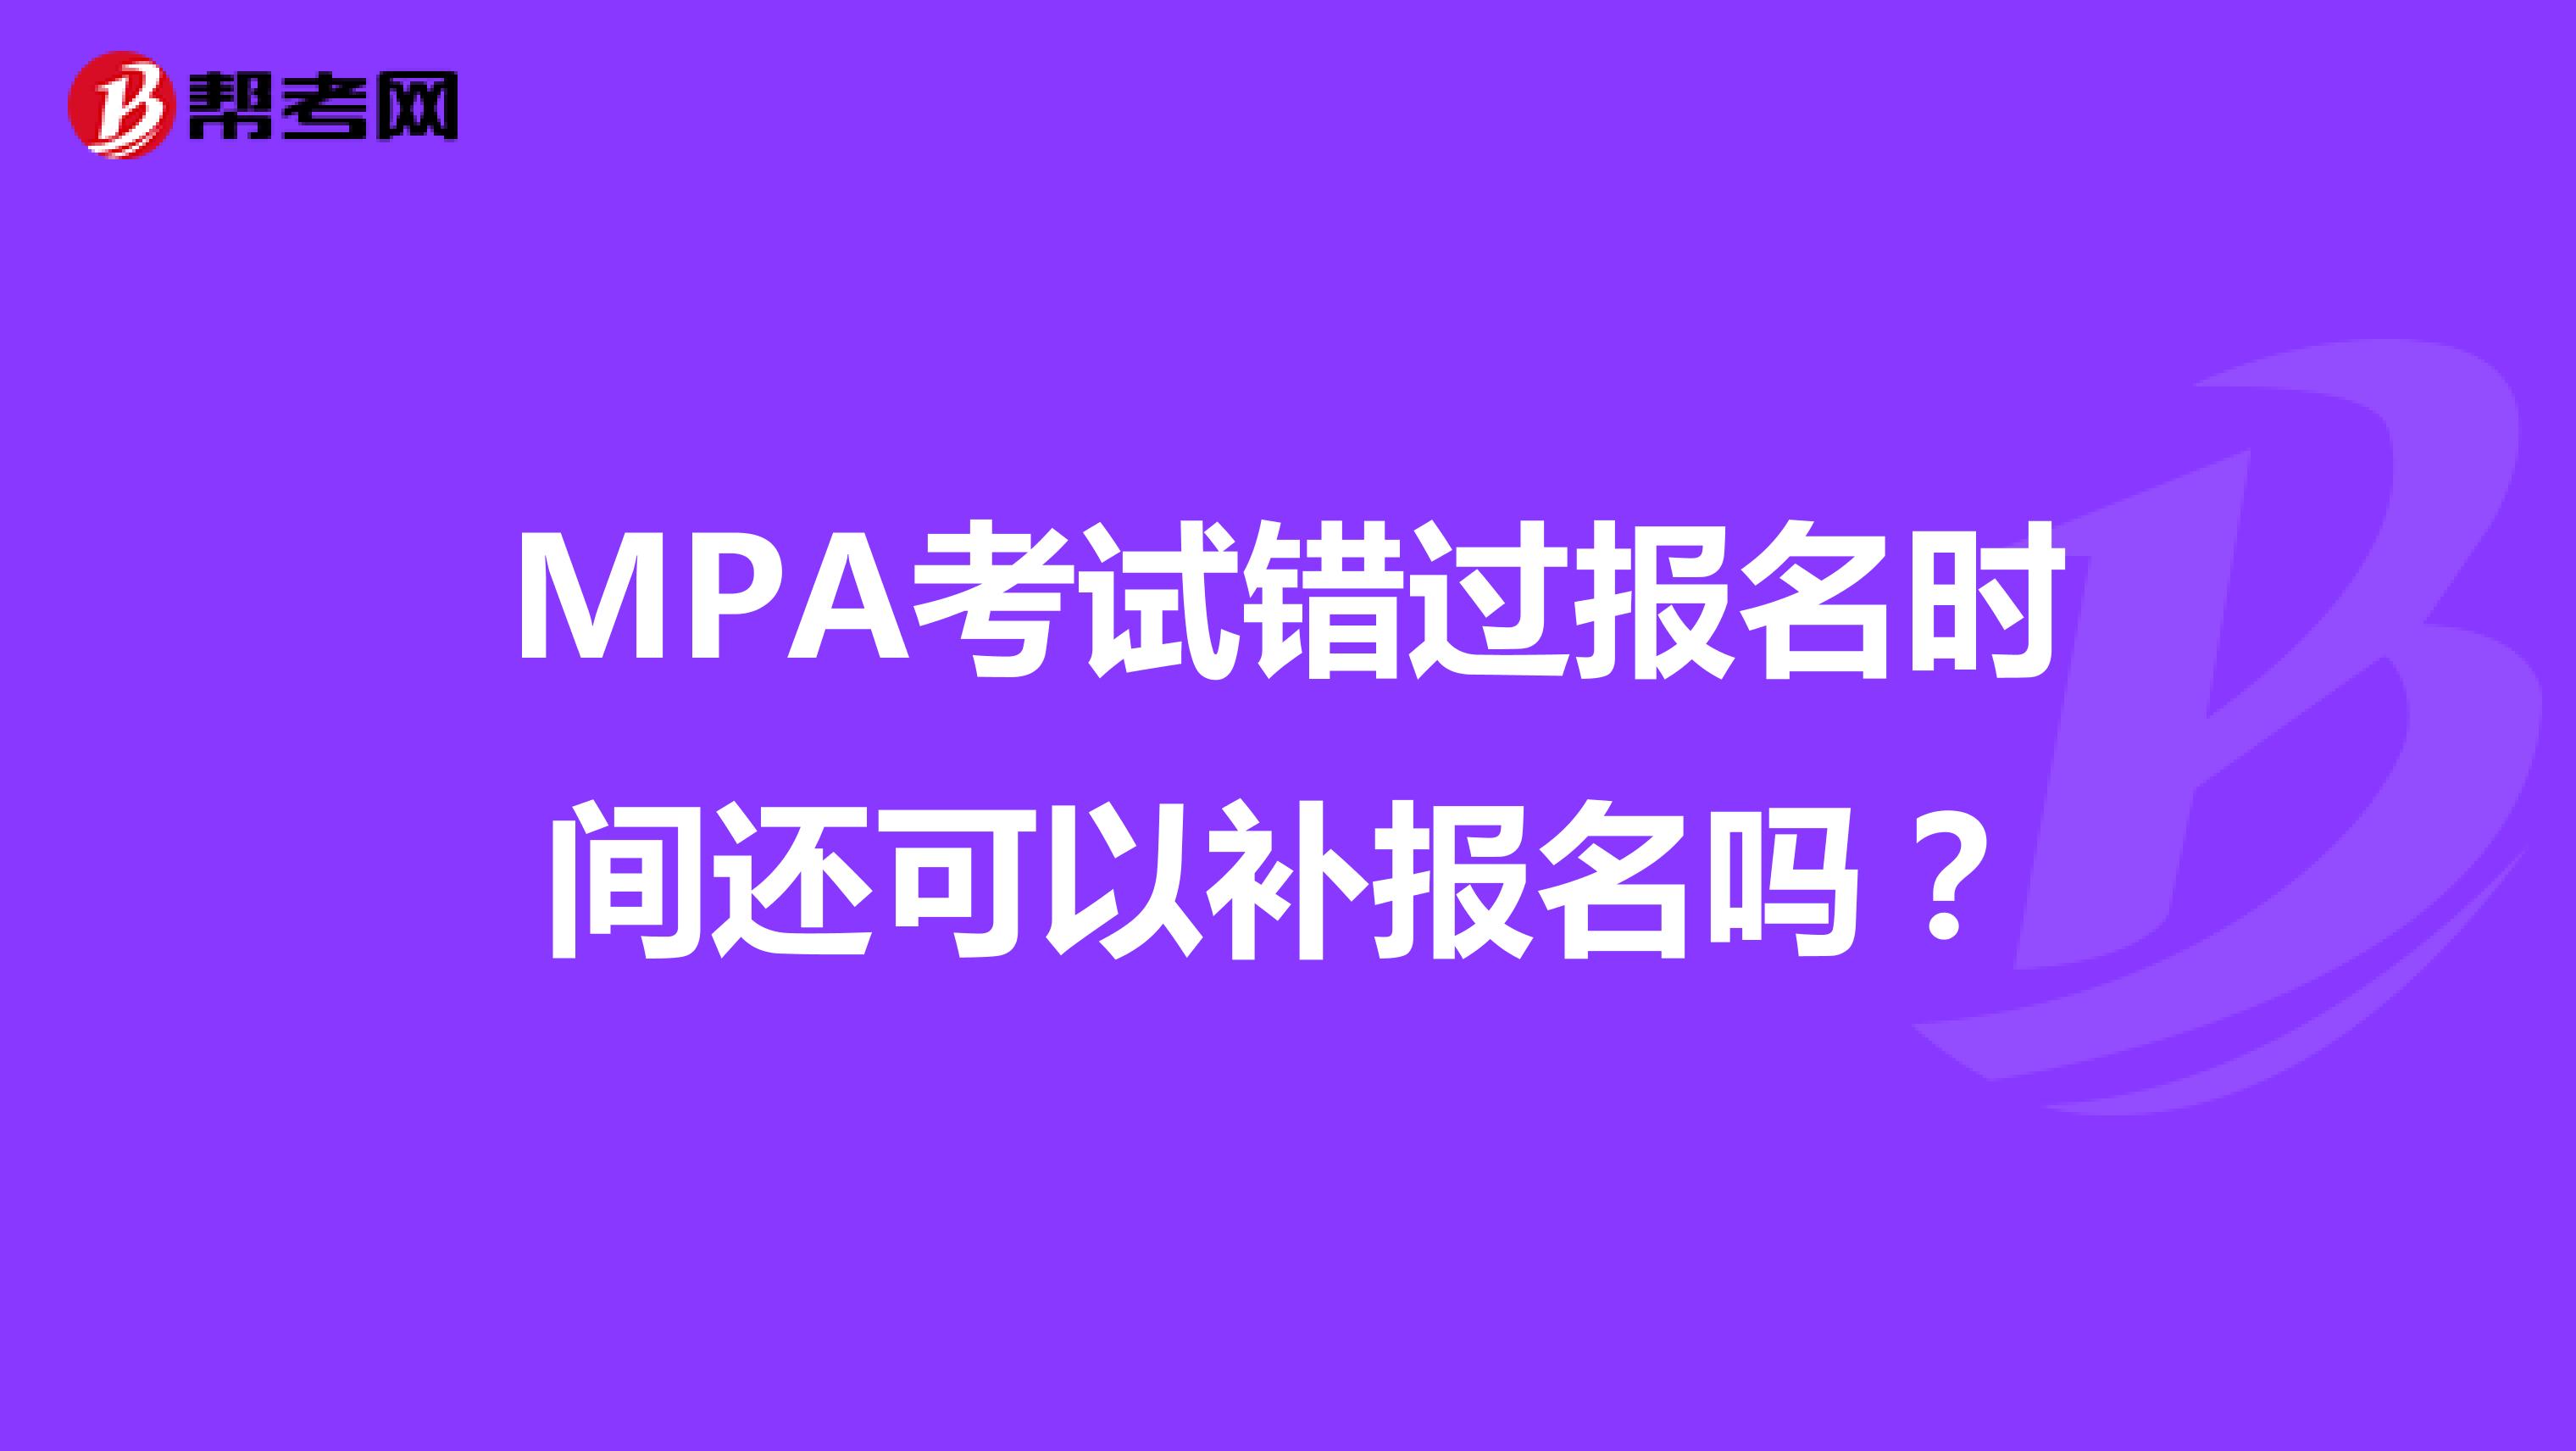 MPA考试错过报名时间还可以补报名吗？